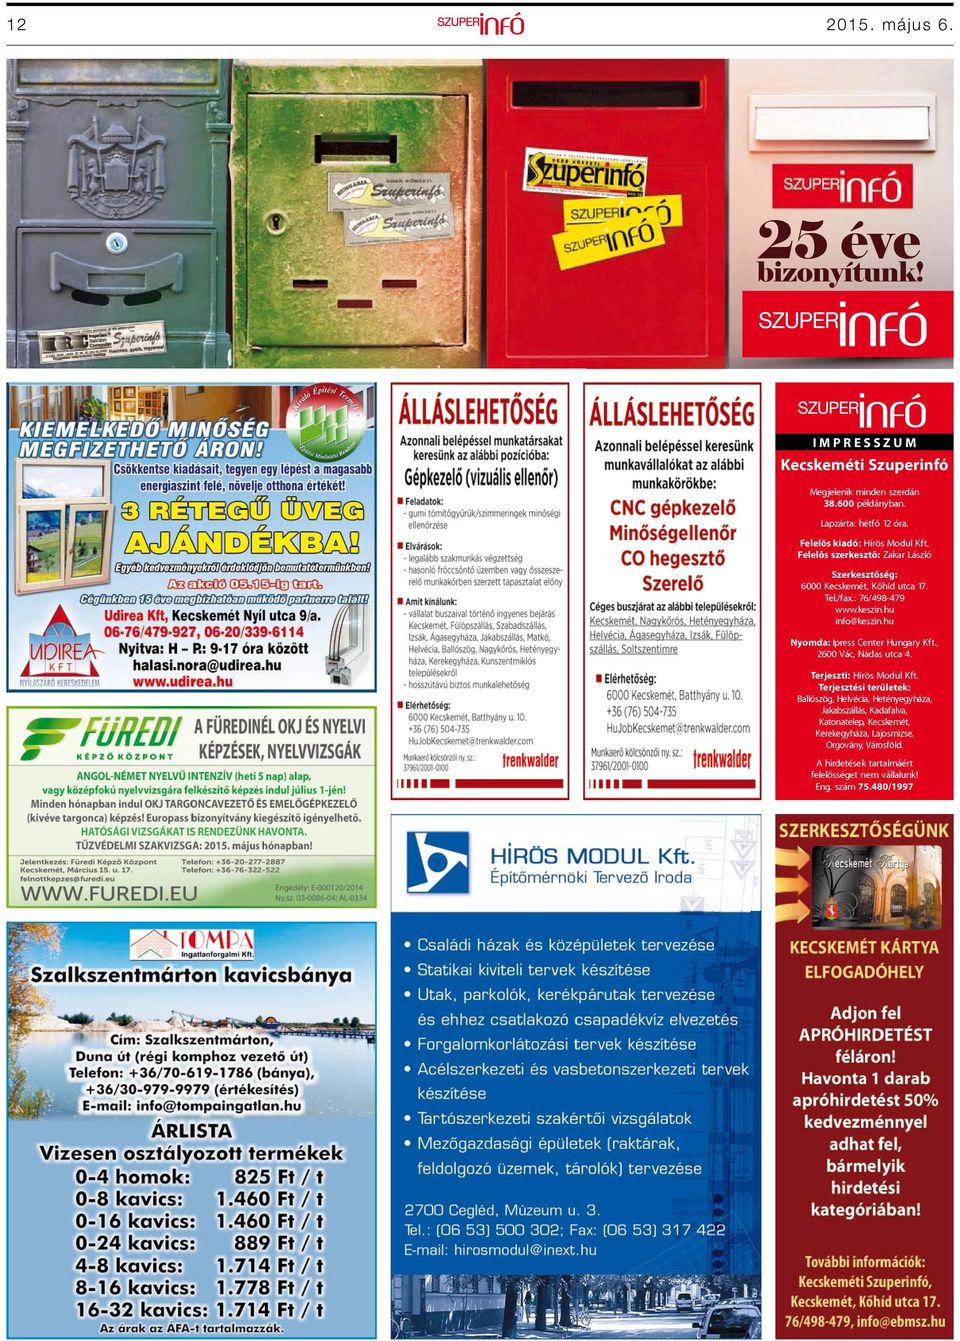 hu info@keszin.hu Nyomda: Ipress Center Hungary Kft., 2600 Vác, Nádas utca 4. Terjeszti: Hírös Modul Kft.